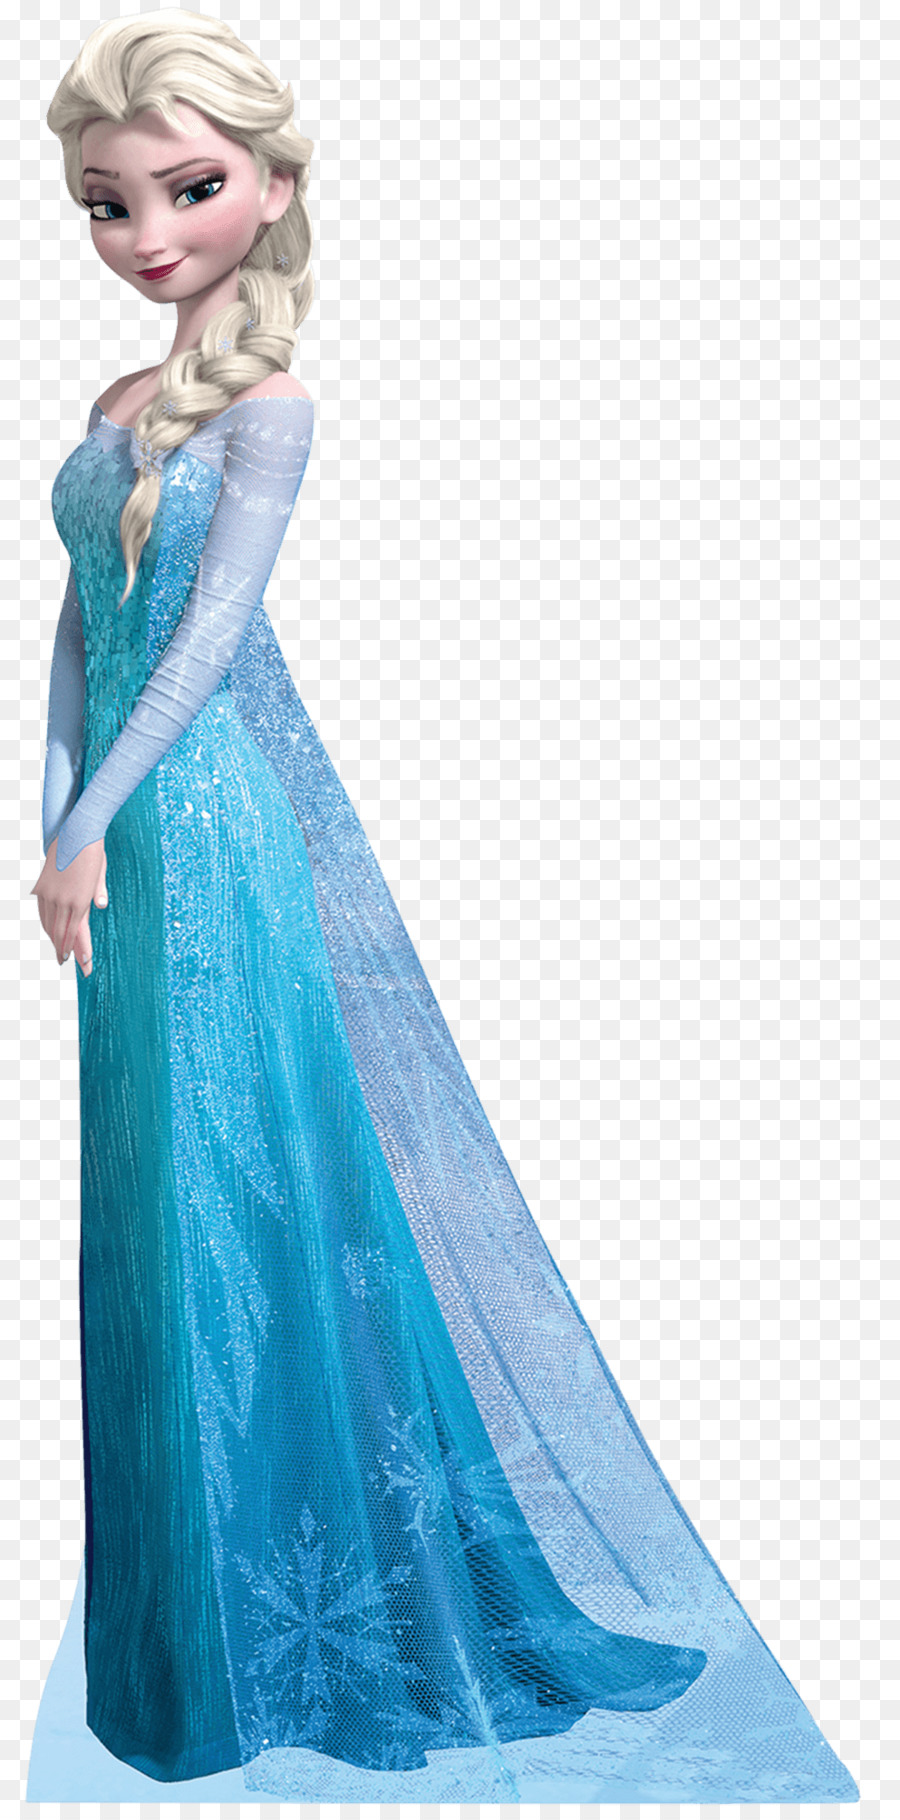 Elsa Kristoff The Snow Queen Rapunzel Frozen - frozen png download - 993*2000 - Free Transparent  png Download.